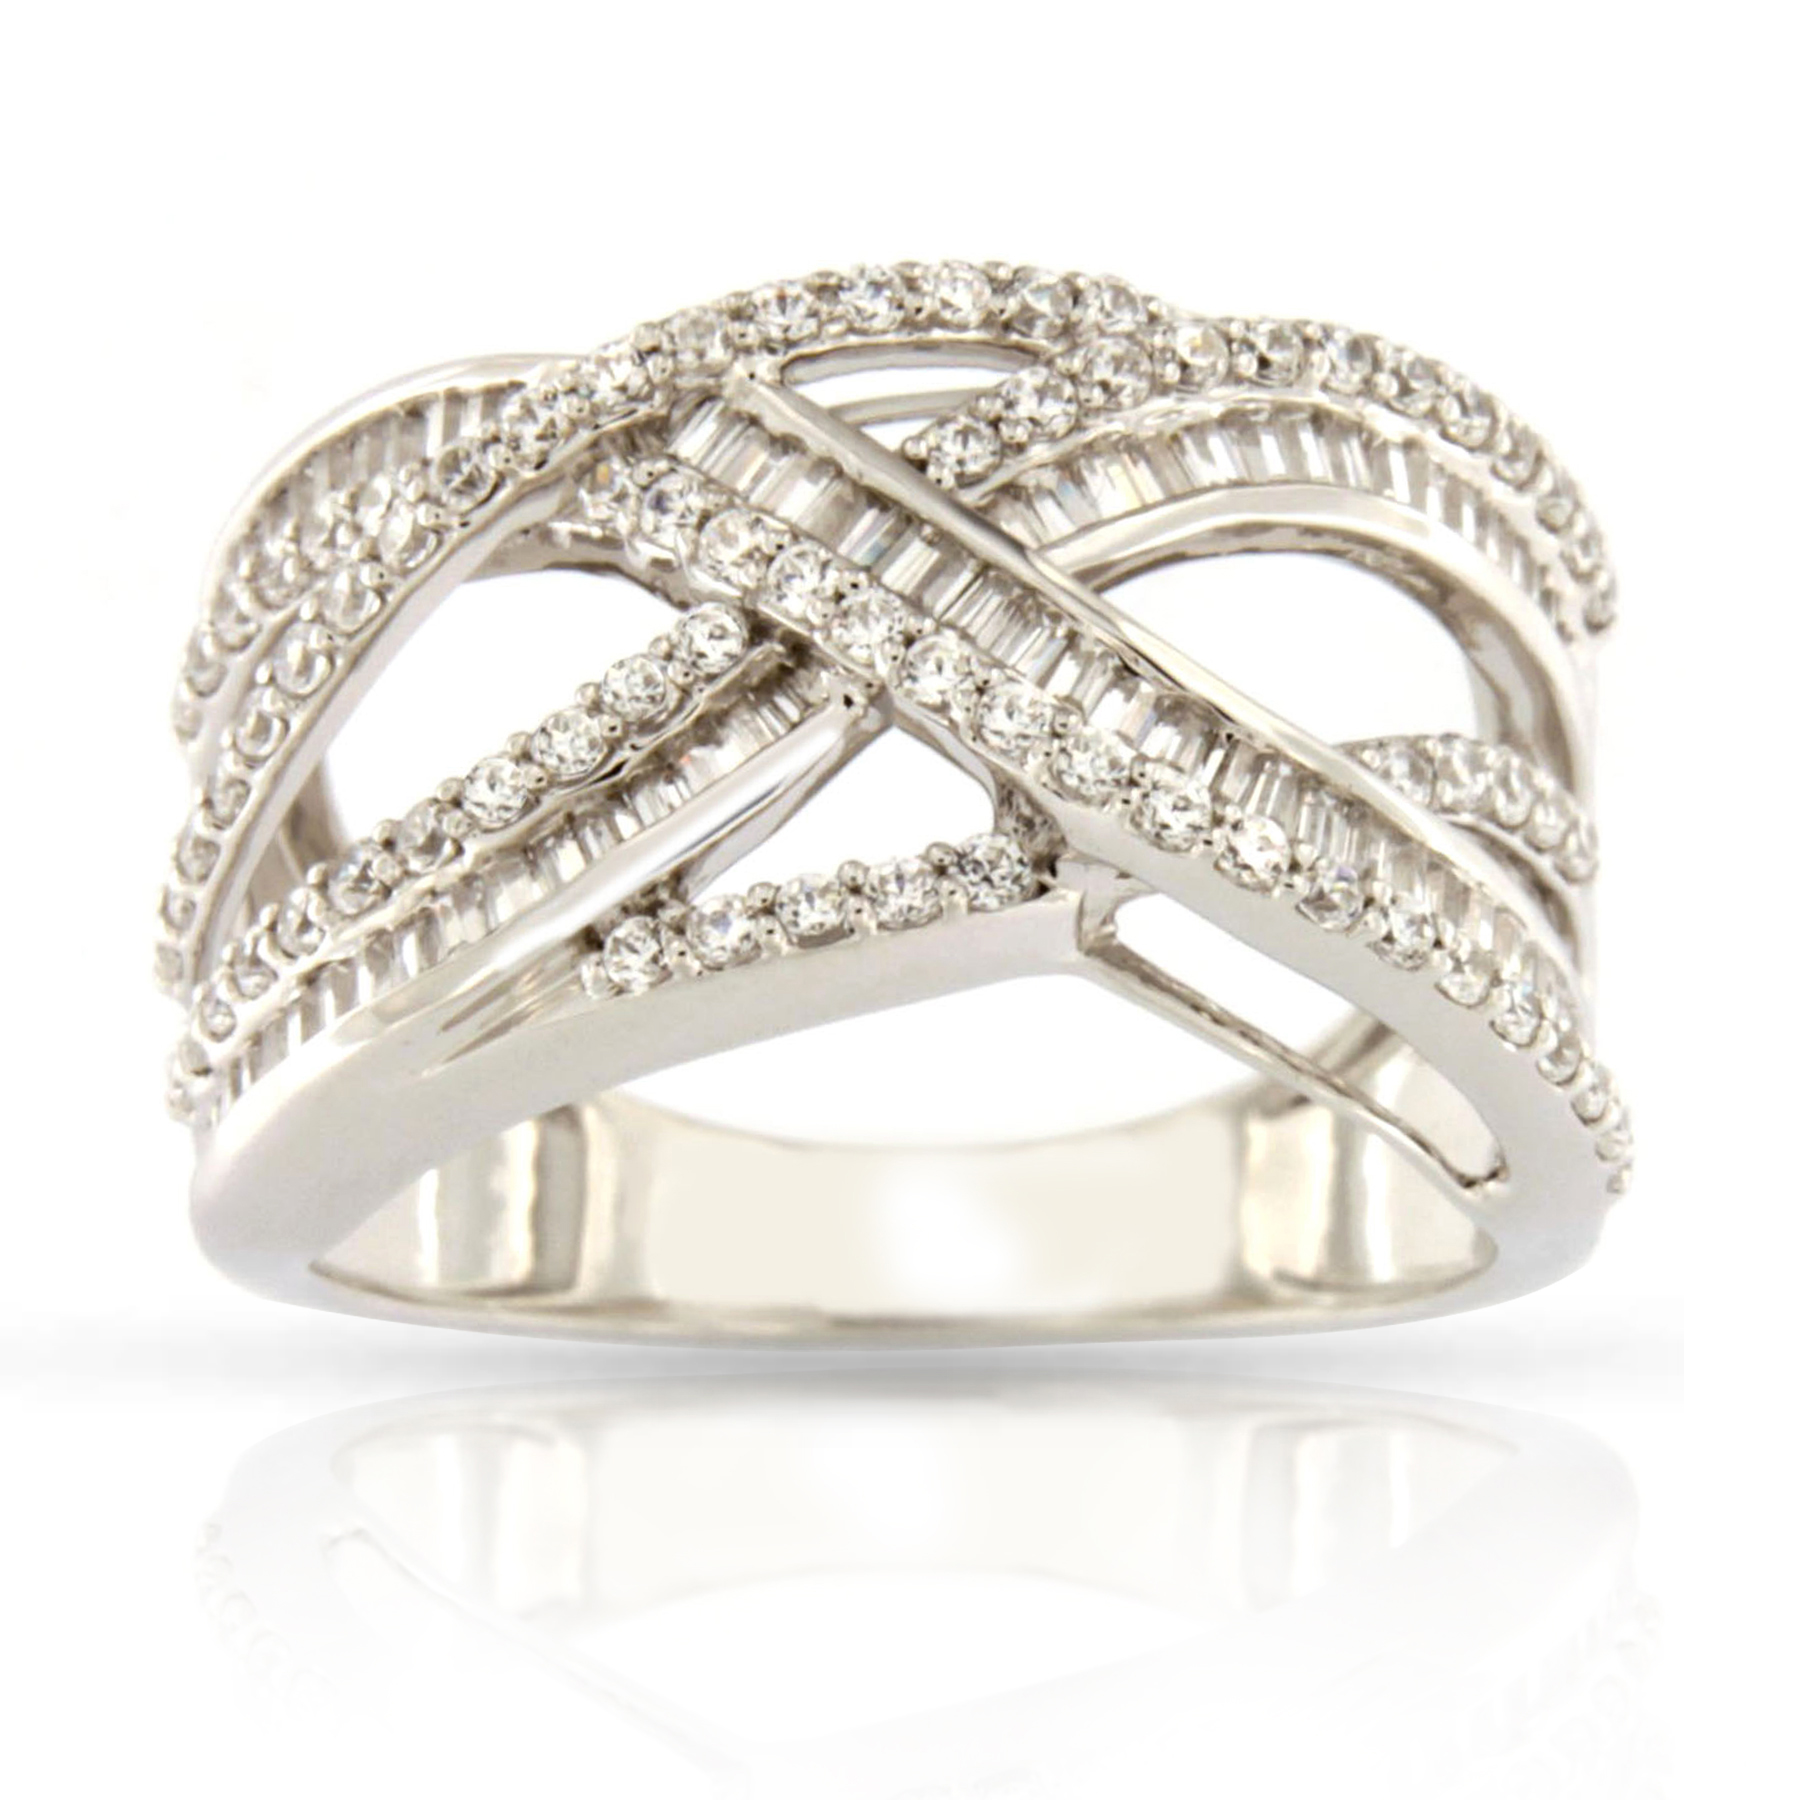 Tradition Diamond 10K White Gold 1.0CTTW Certified Diamond Twist Bridge Anniversary Ring - Size 7 Only